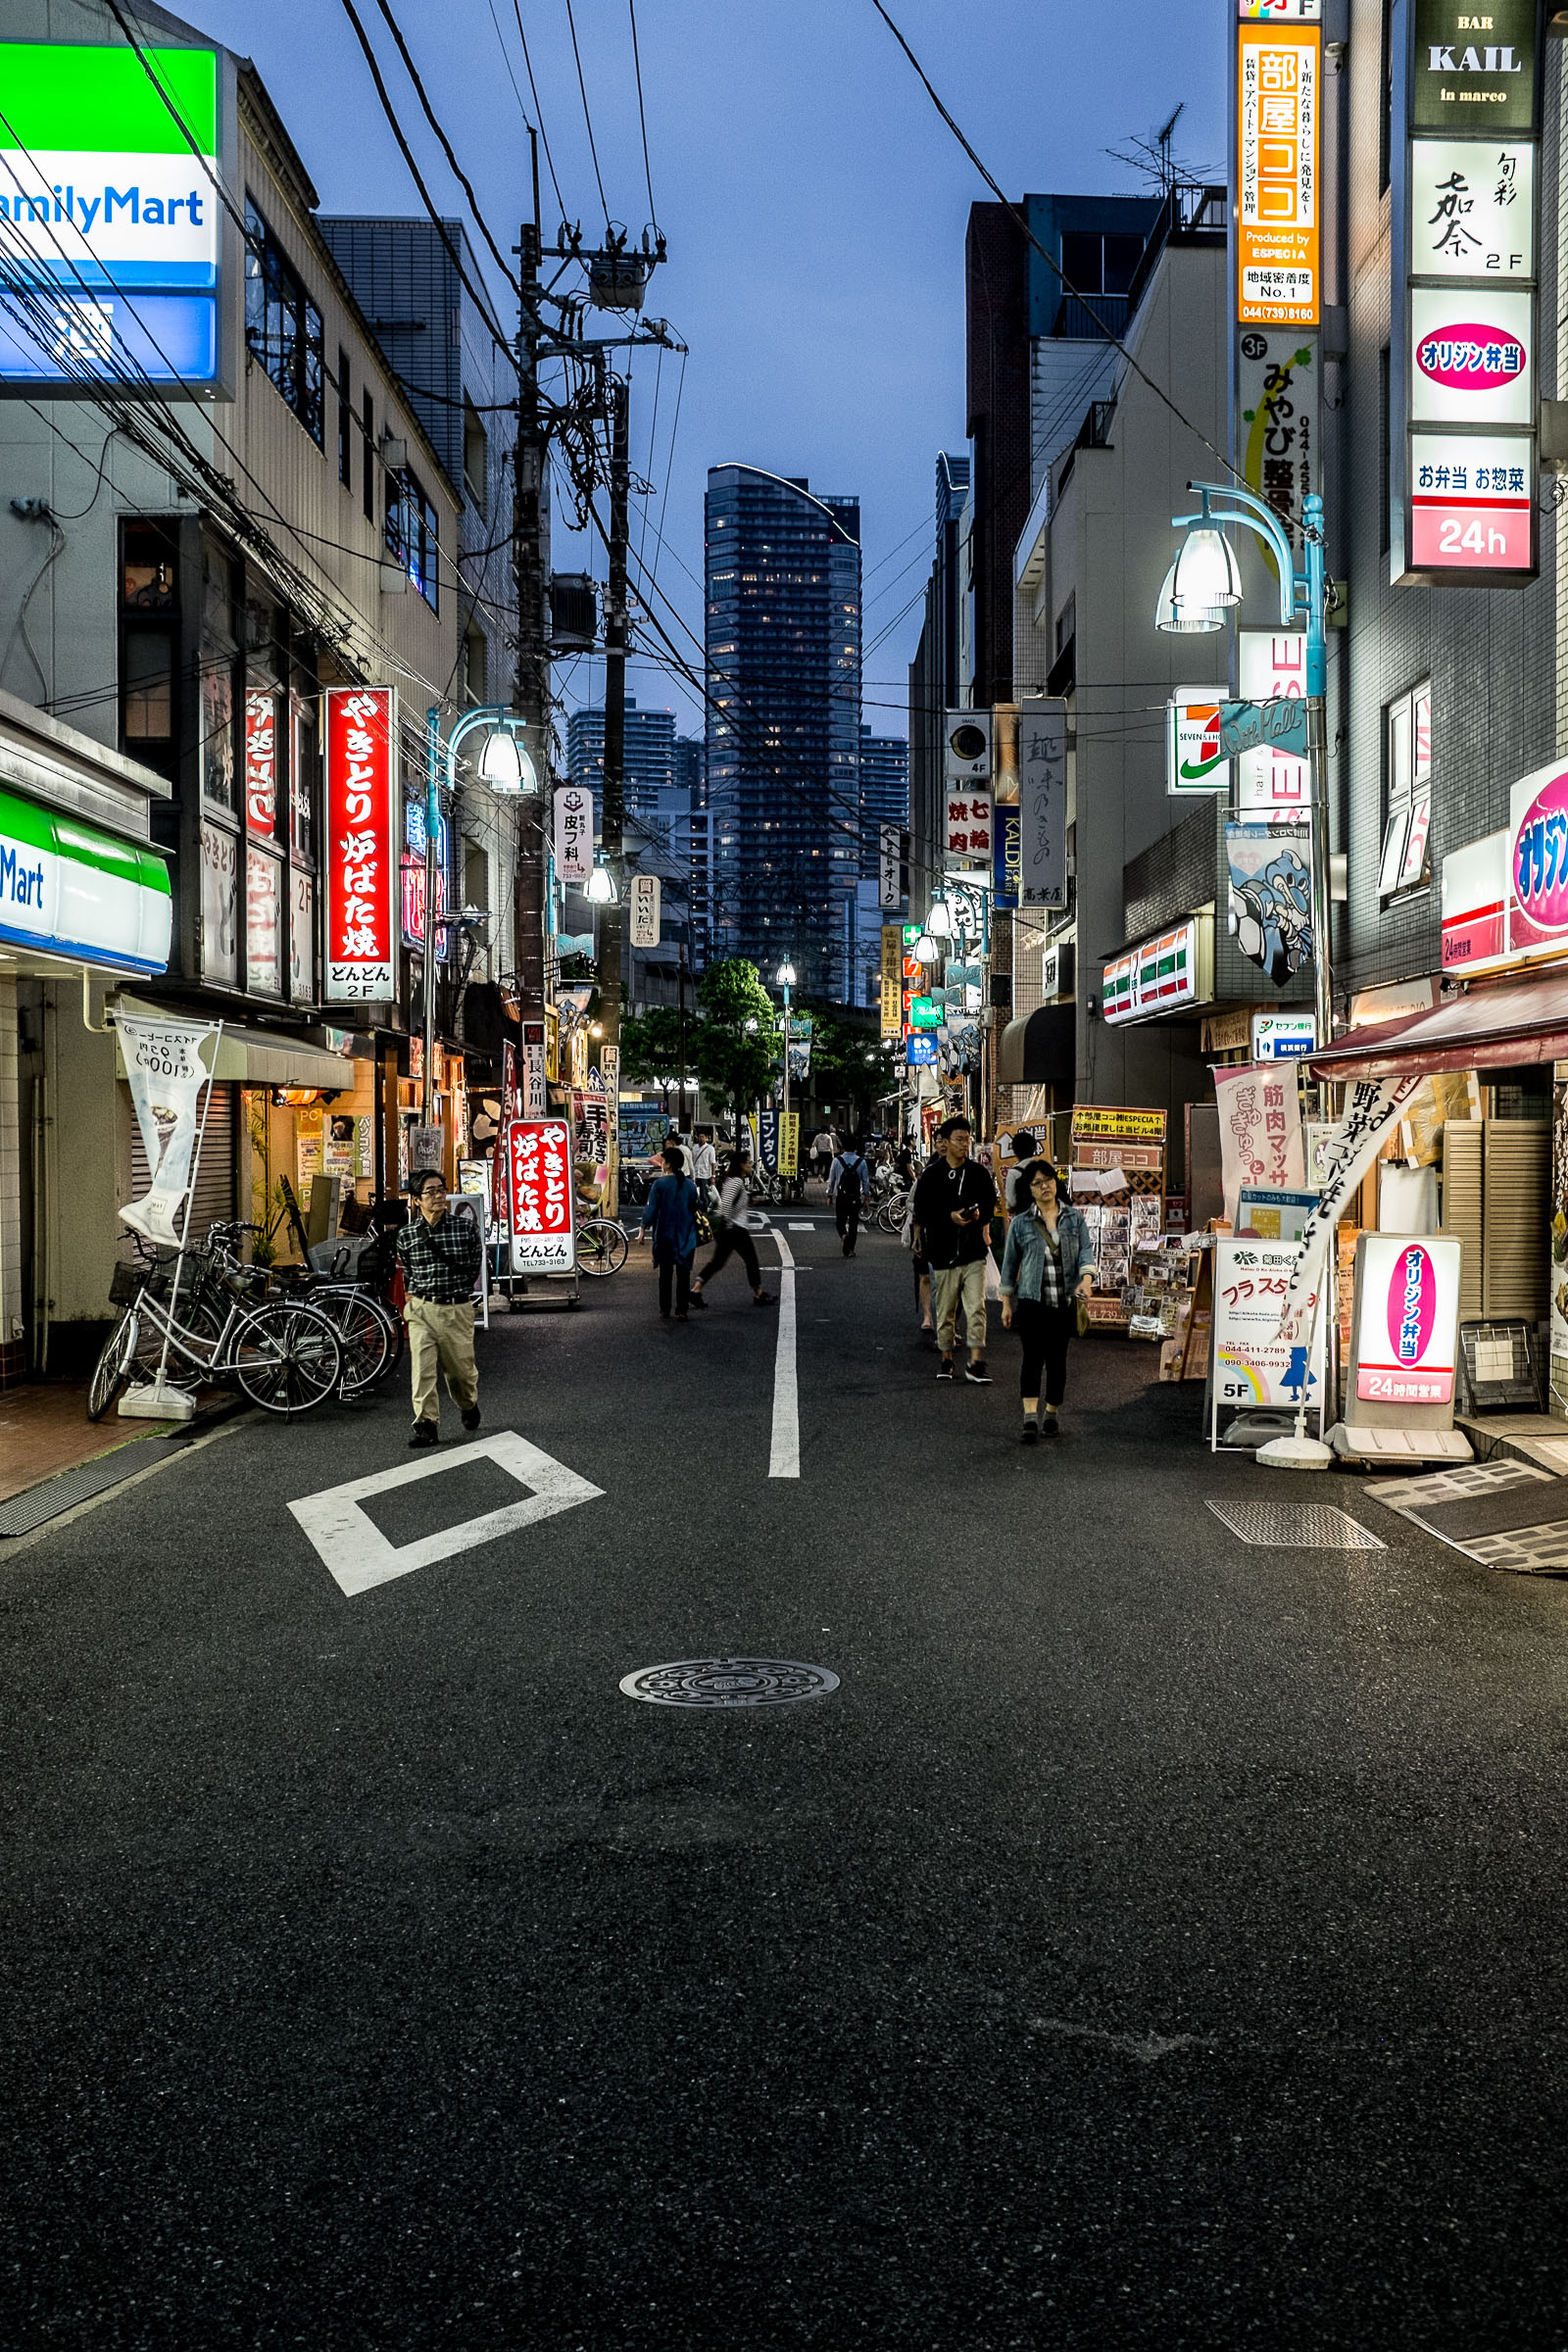 Random street in Yokohama at night